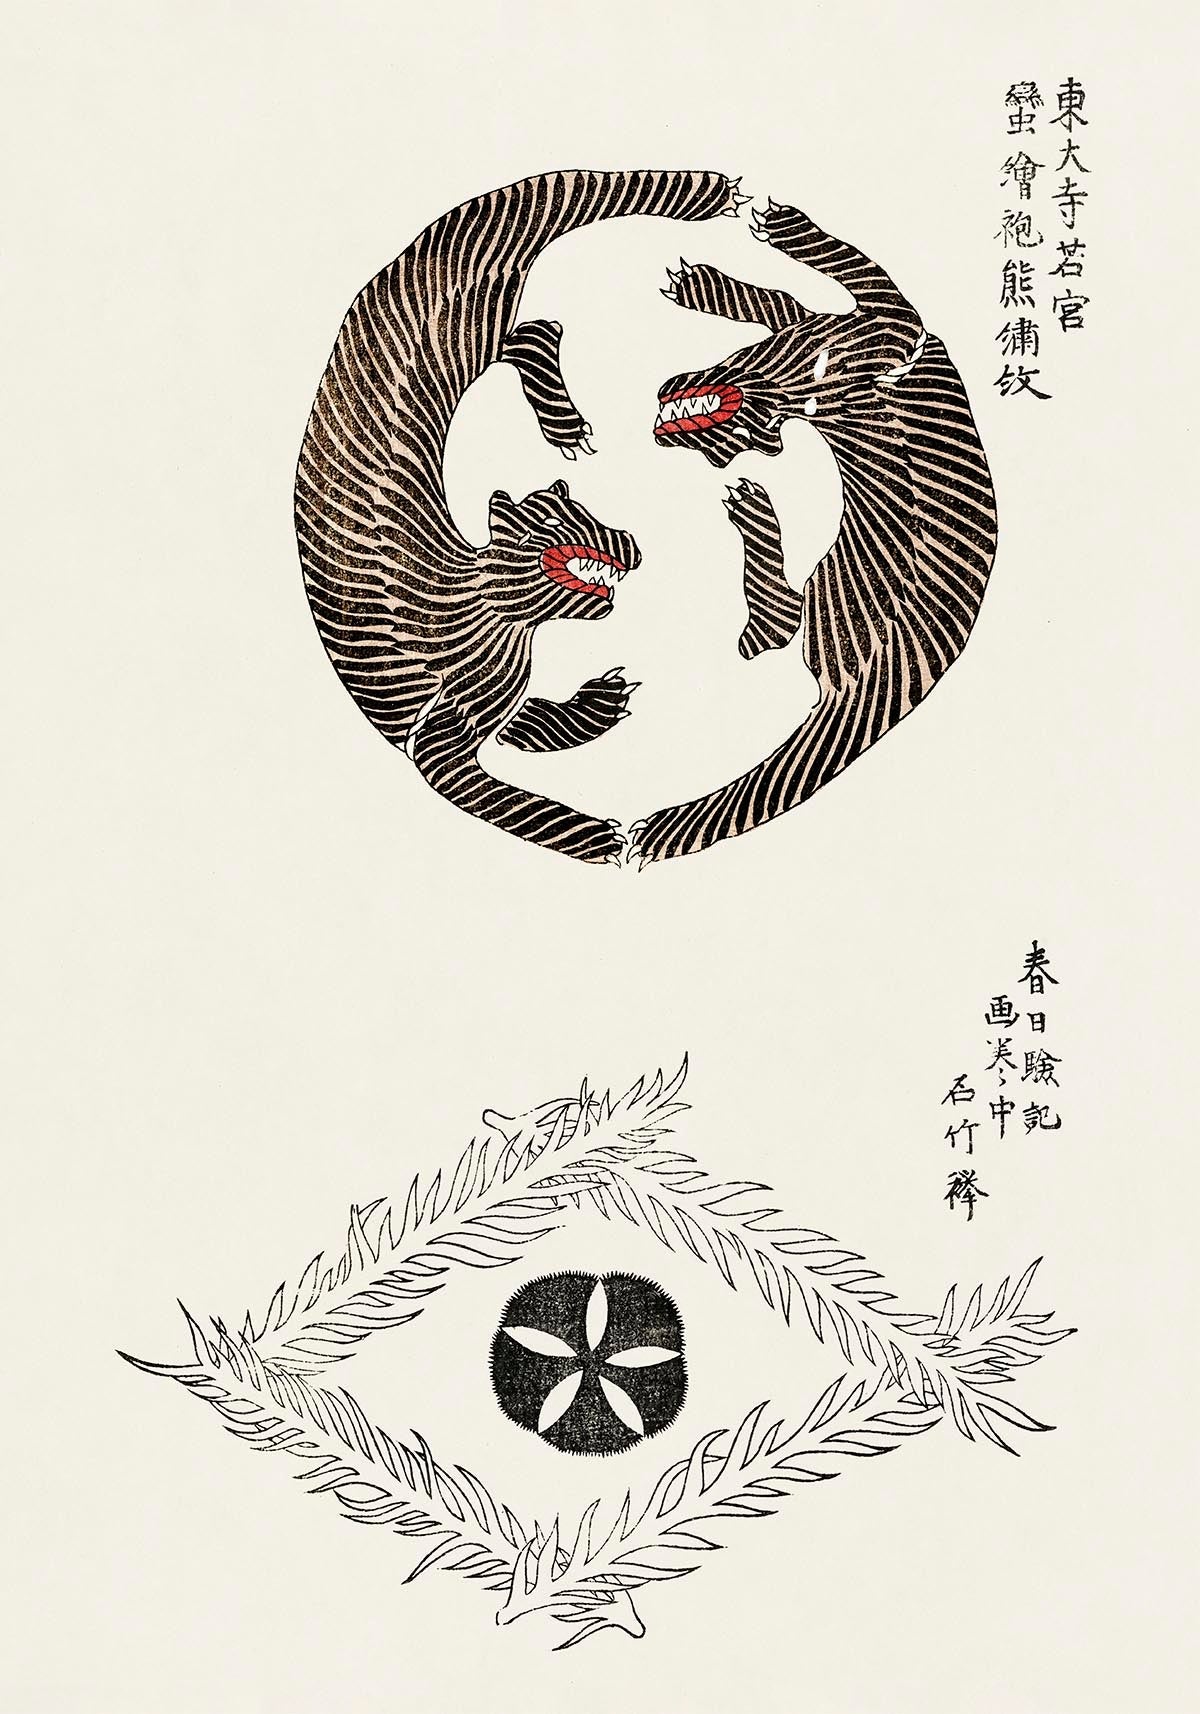 Vintage Japanese Woodblock Print No. 15